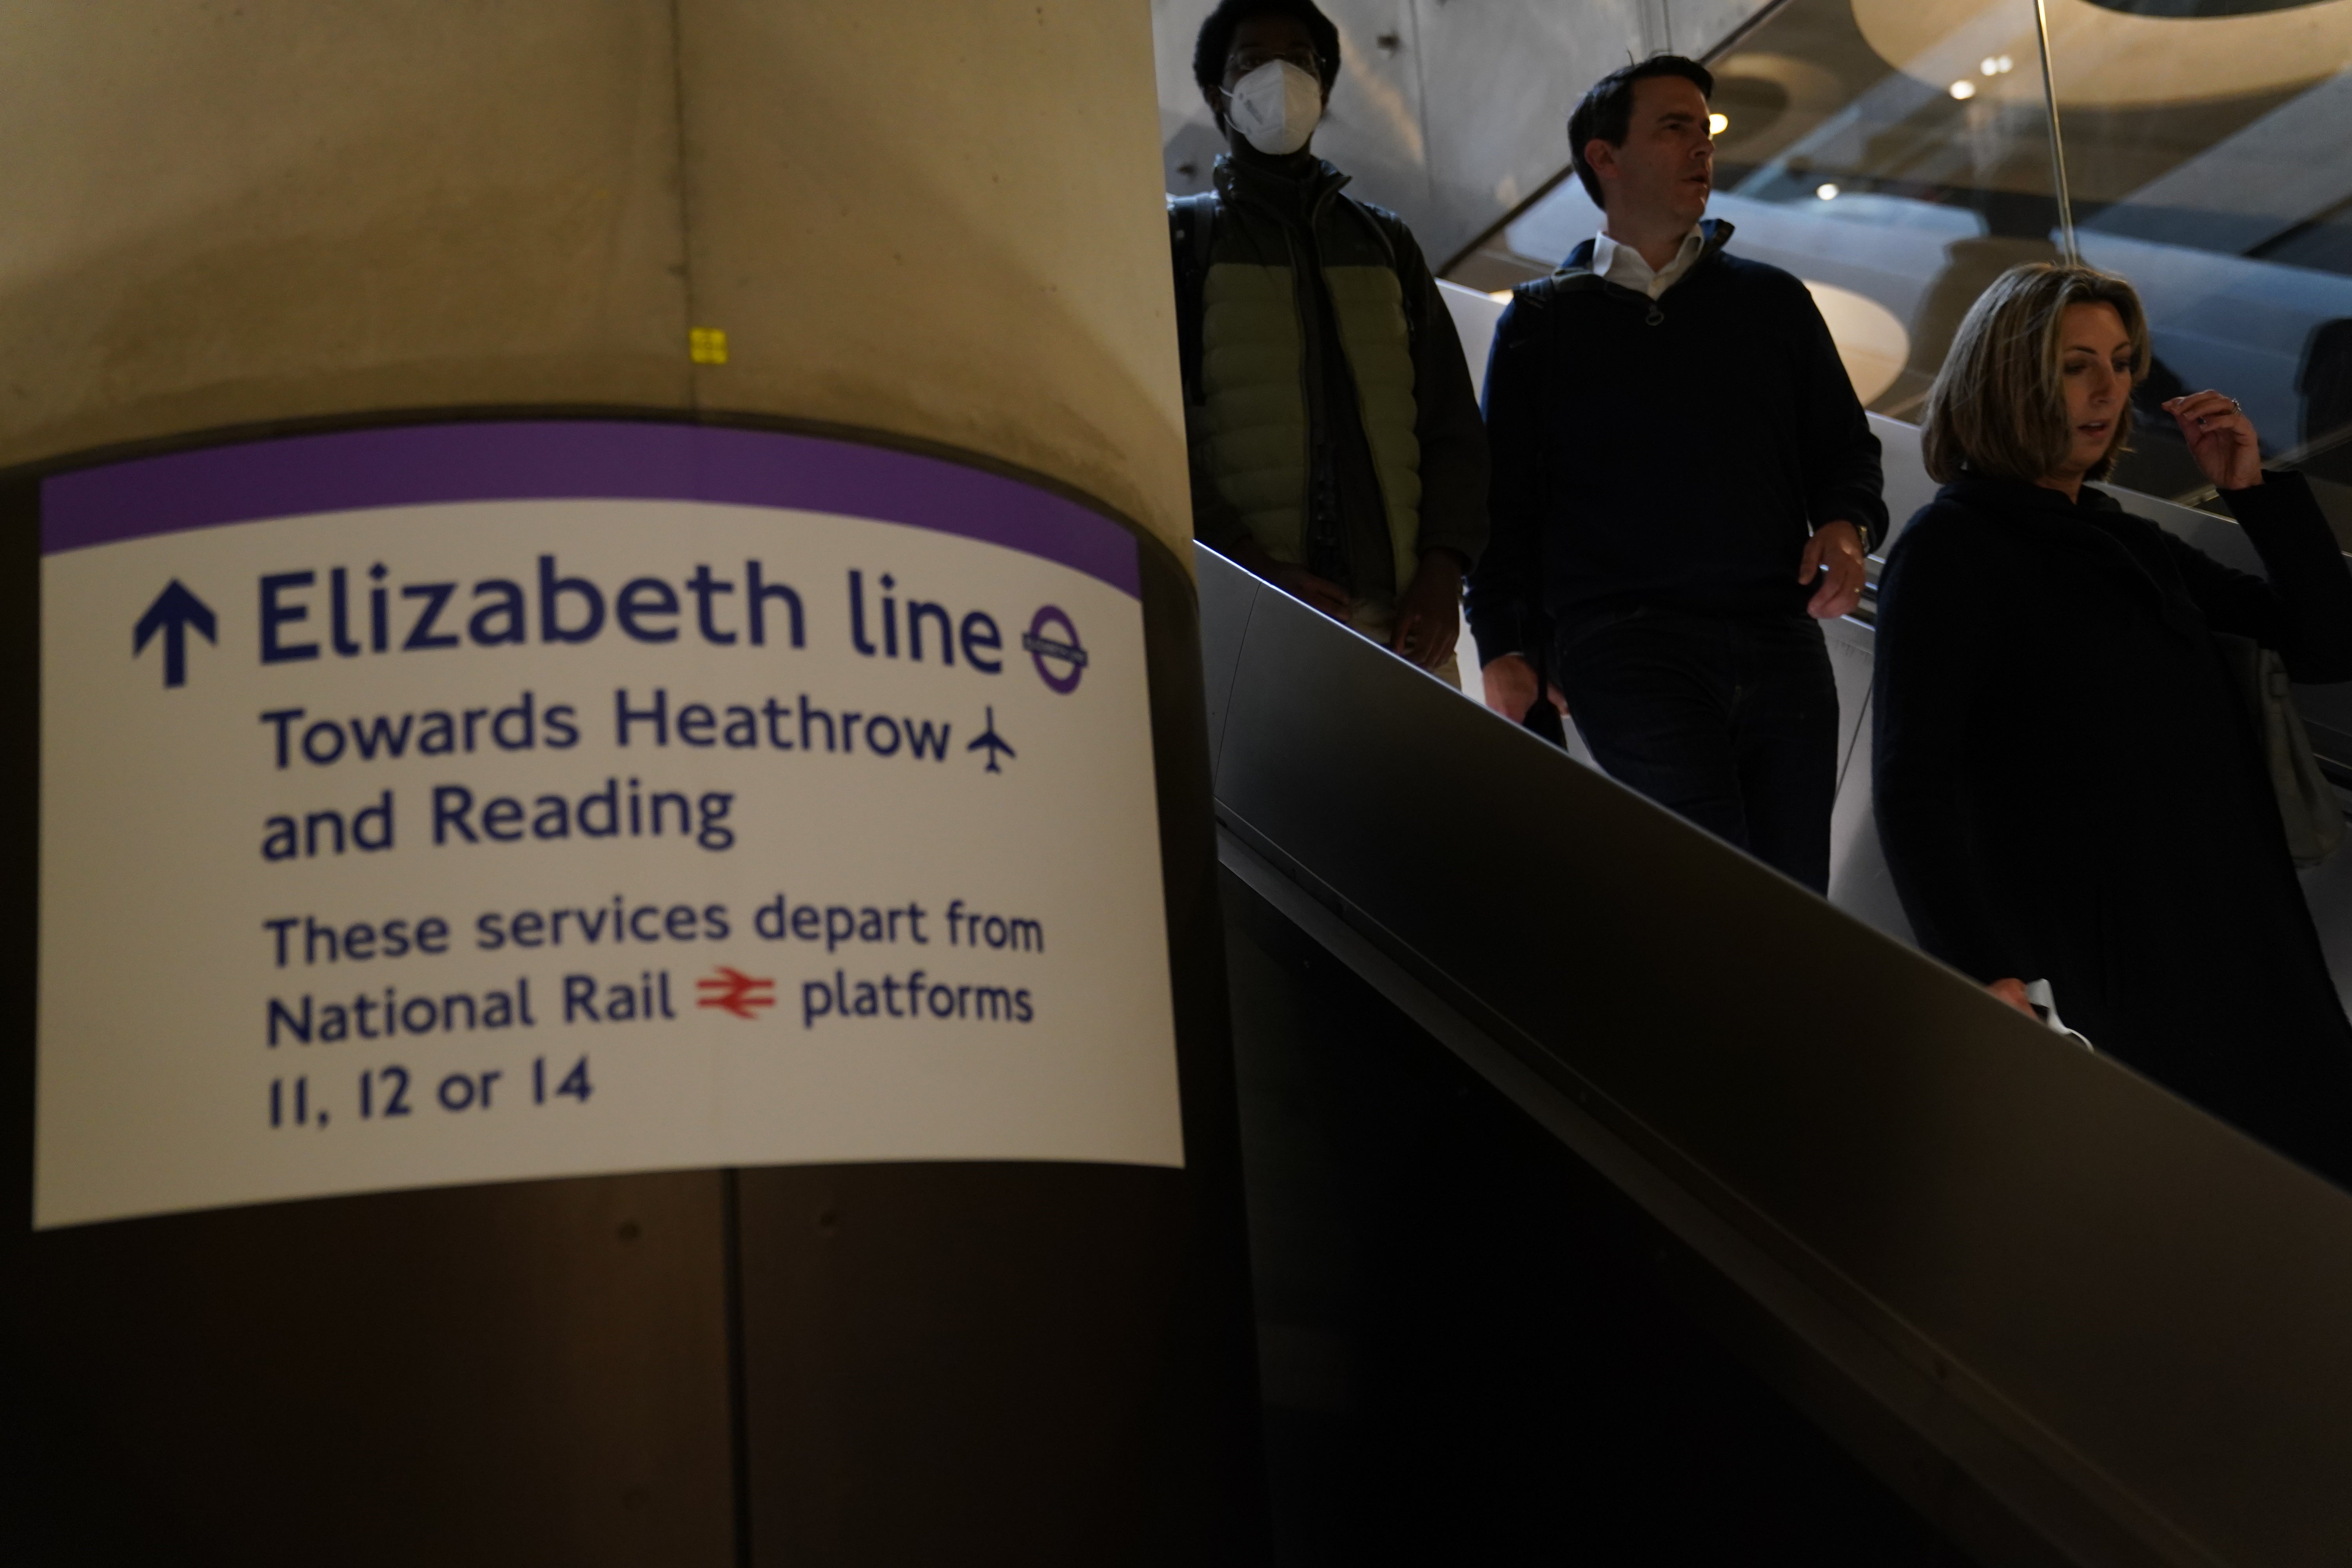 Passengers descend the escalators to the Elizabeth line platforms at Paddington Station, London (Kirsty O’Connor/PA)